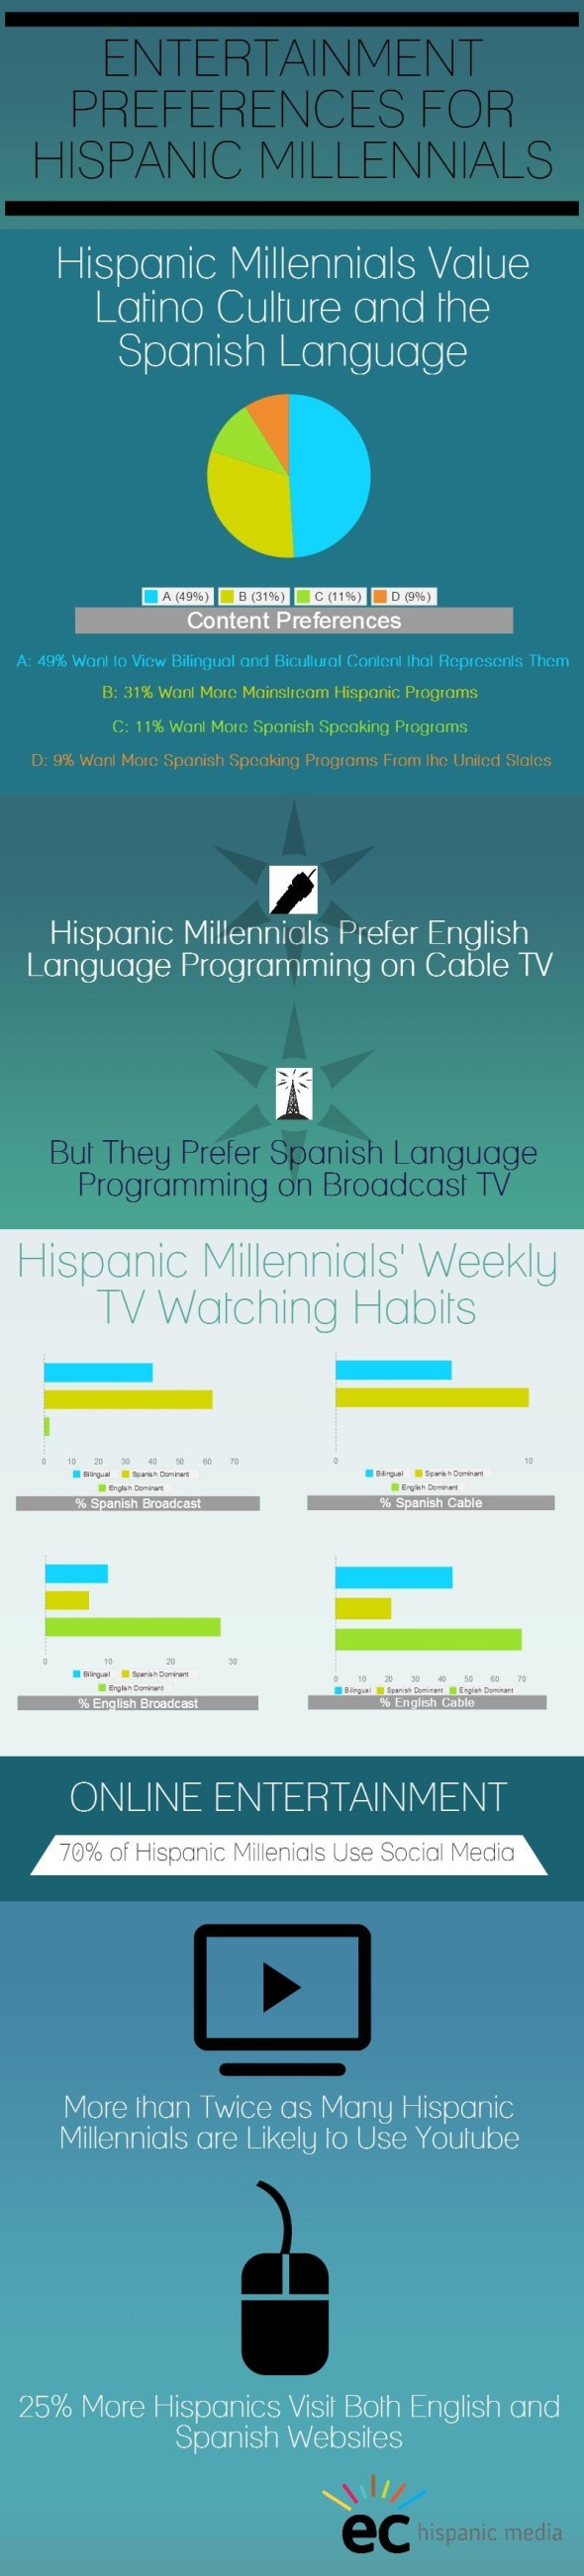 hispanic_millennials_entertainment_preferences